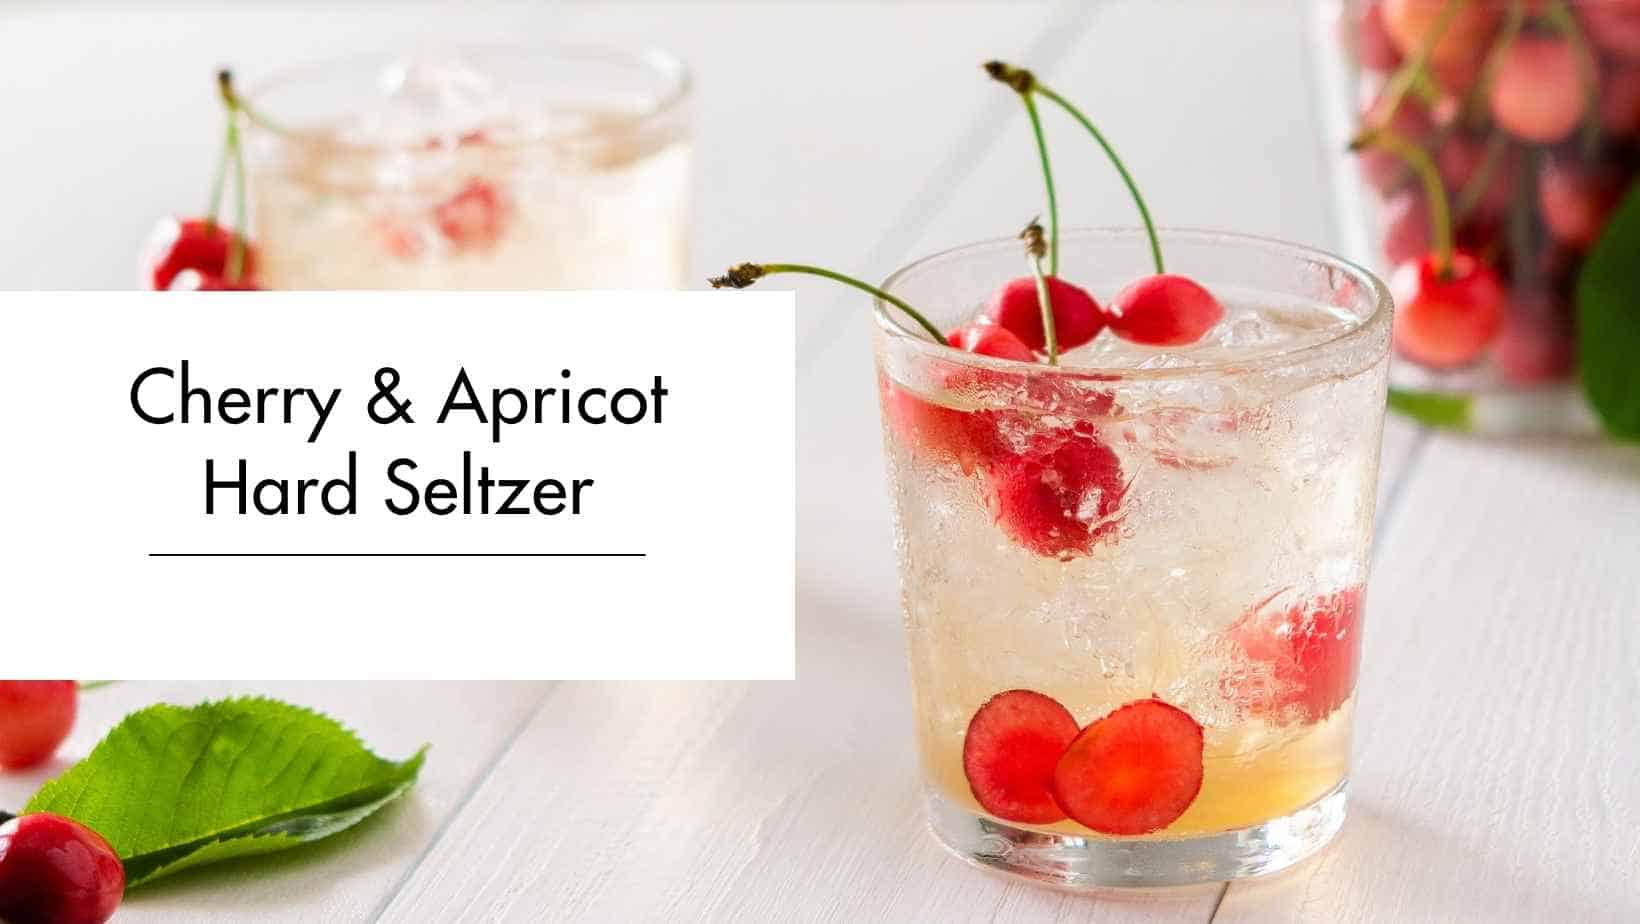 Cherry & Apricot Hard Seltzer